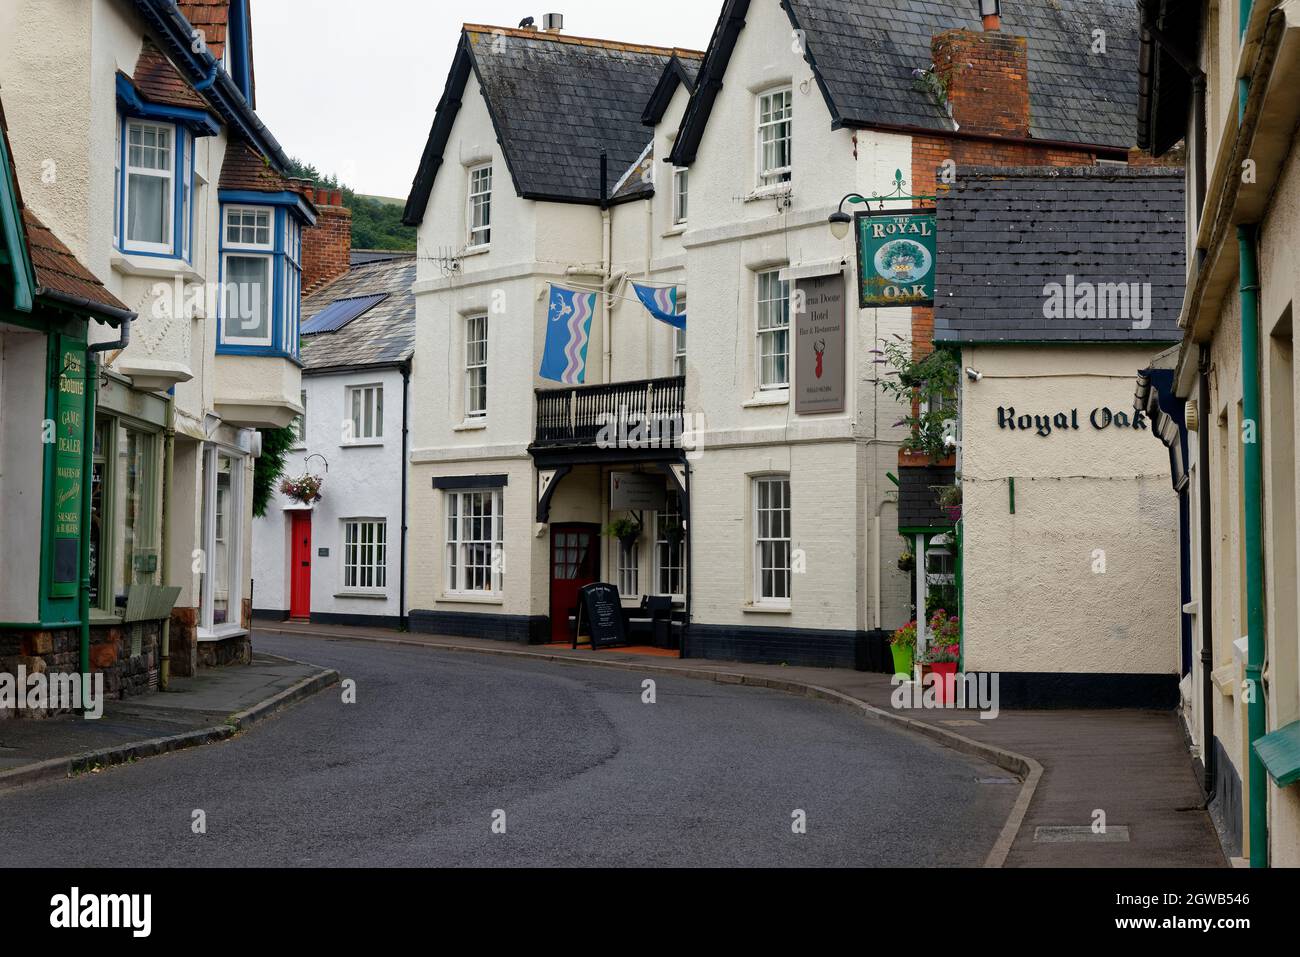 The Lorna Doone Hotel and Royal Oak inn, High Street, Porlock, Somerset, UK Stock Photo